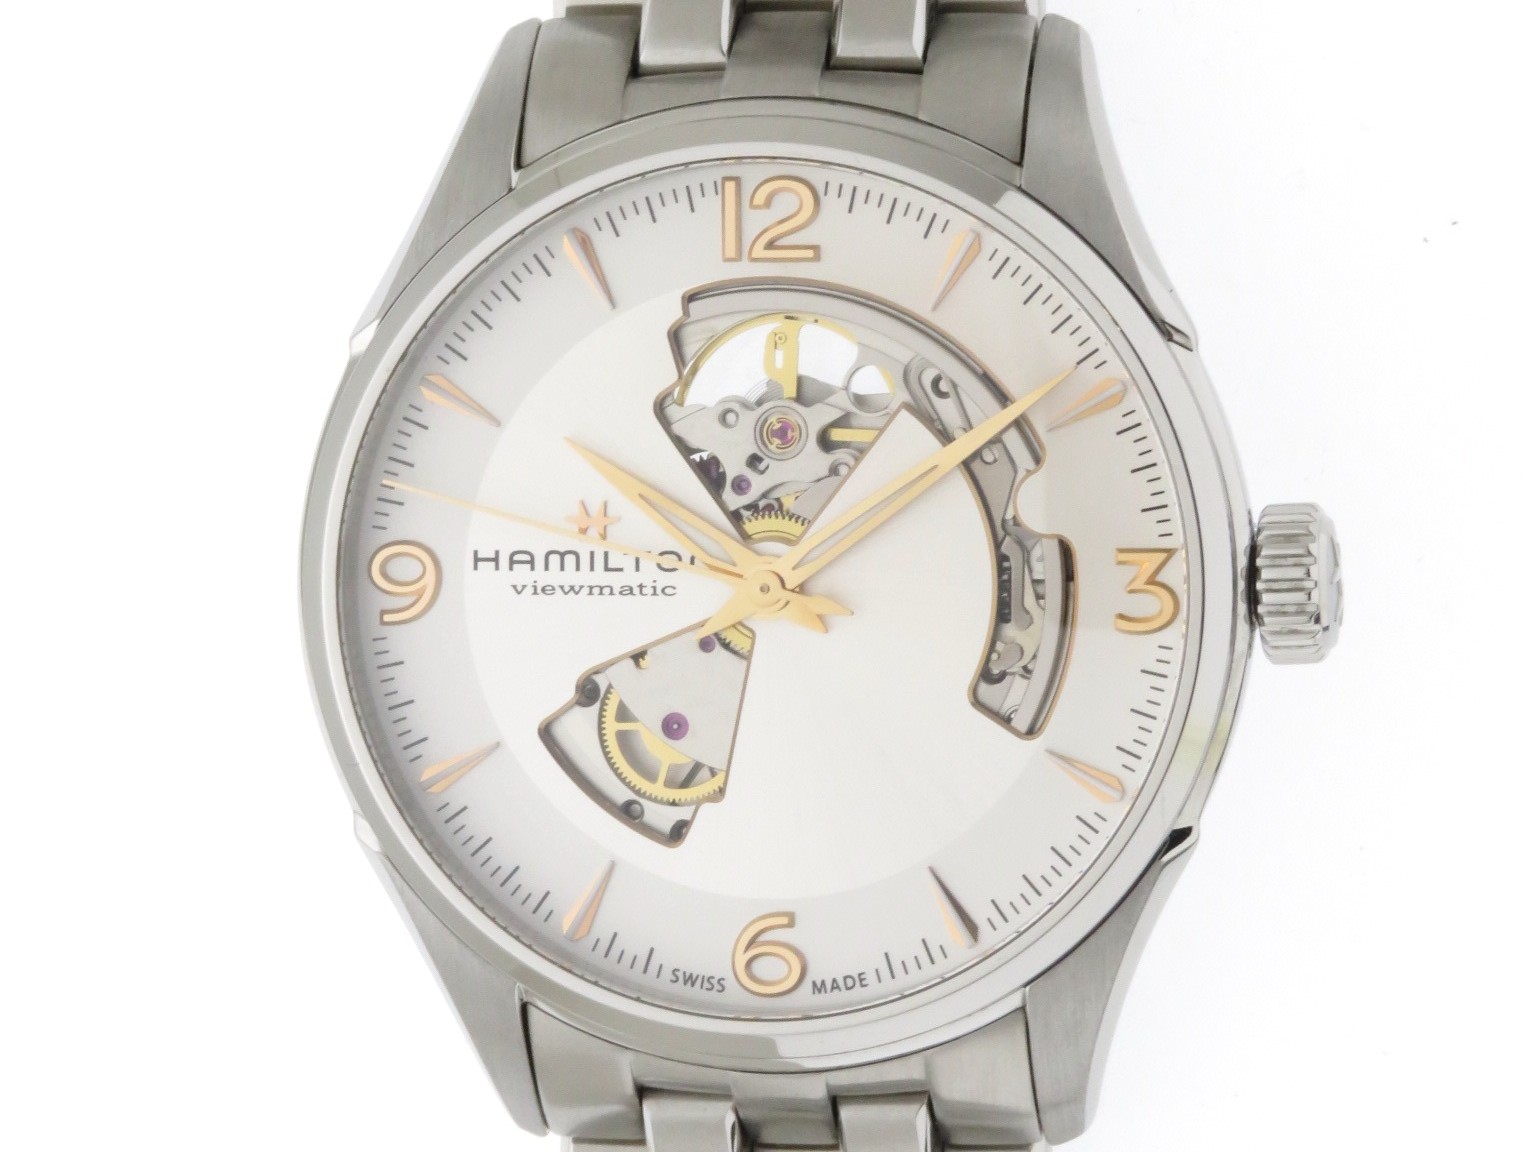 HAMILTON ハミルトン 時計 H327150  ジャズマスター ビューマチック オートマチック 自動巻き ウォッチ 時計 シルバー系